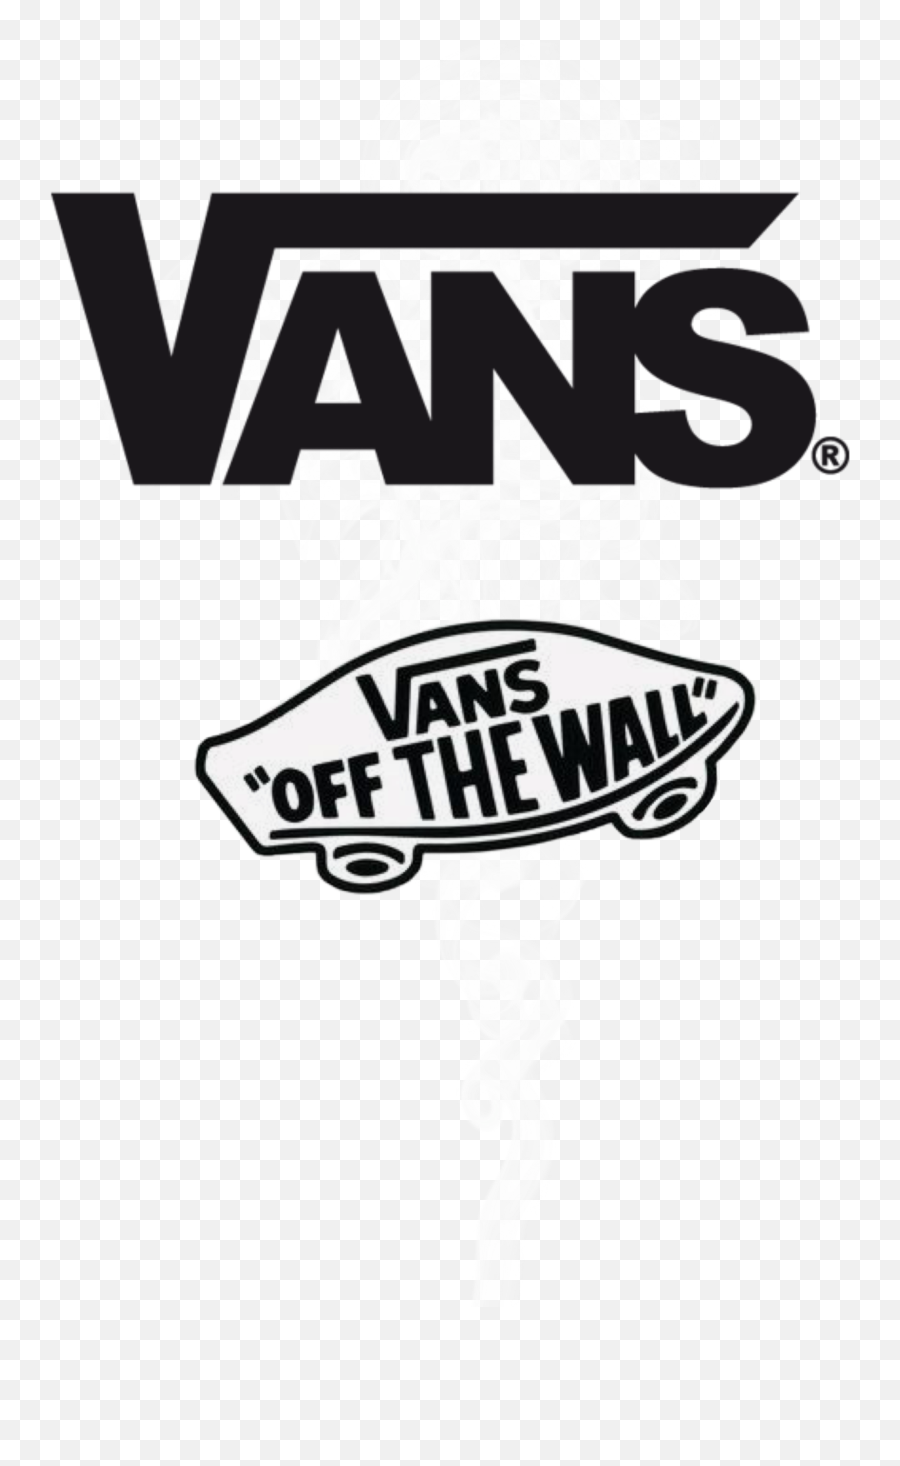 The Most Edited Faker Picsart - Vans Off The Wall Emoji,Faker Logo